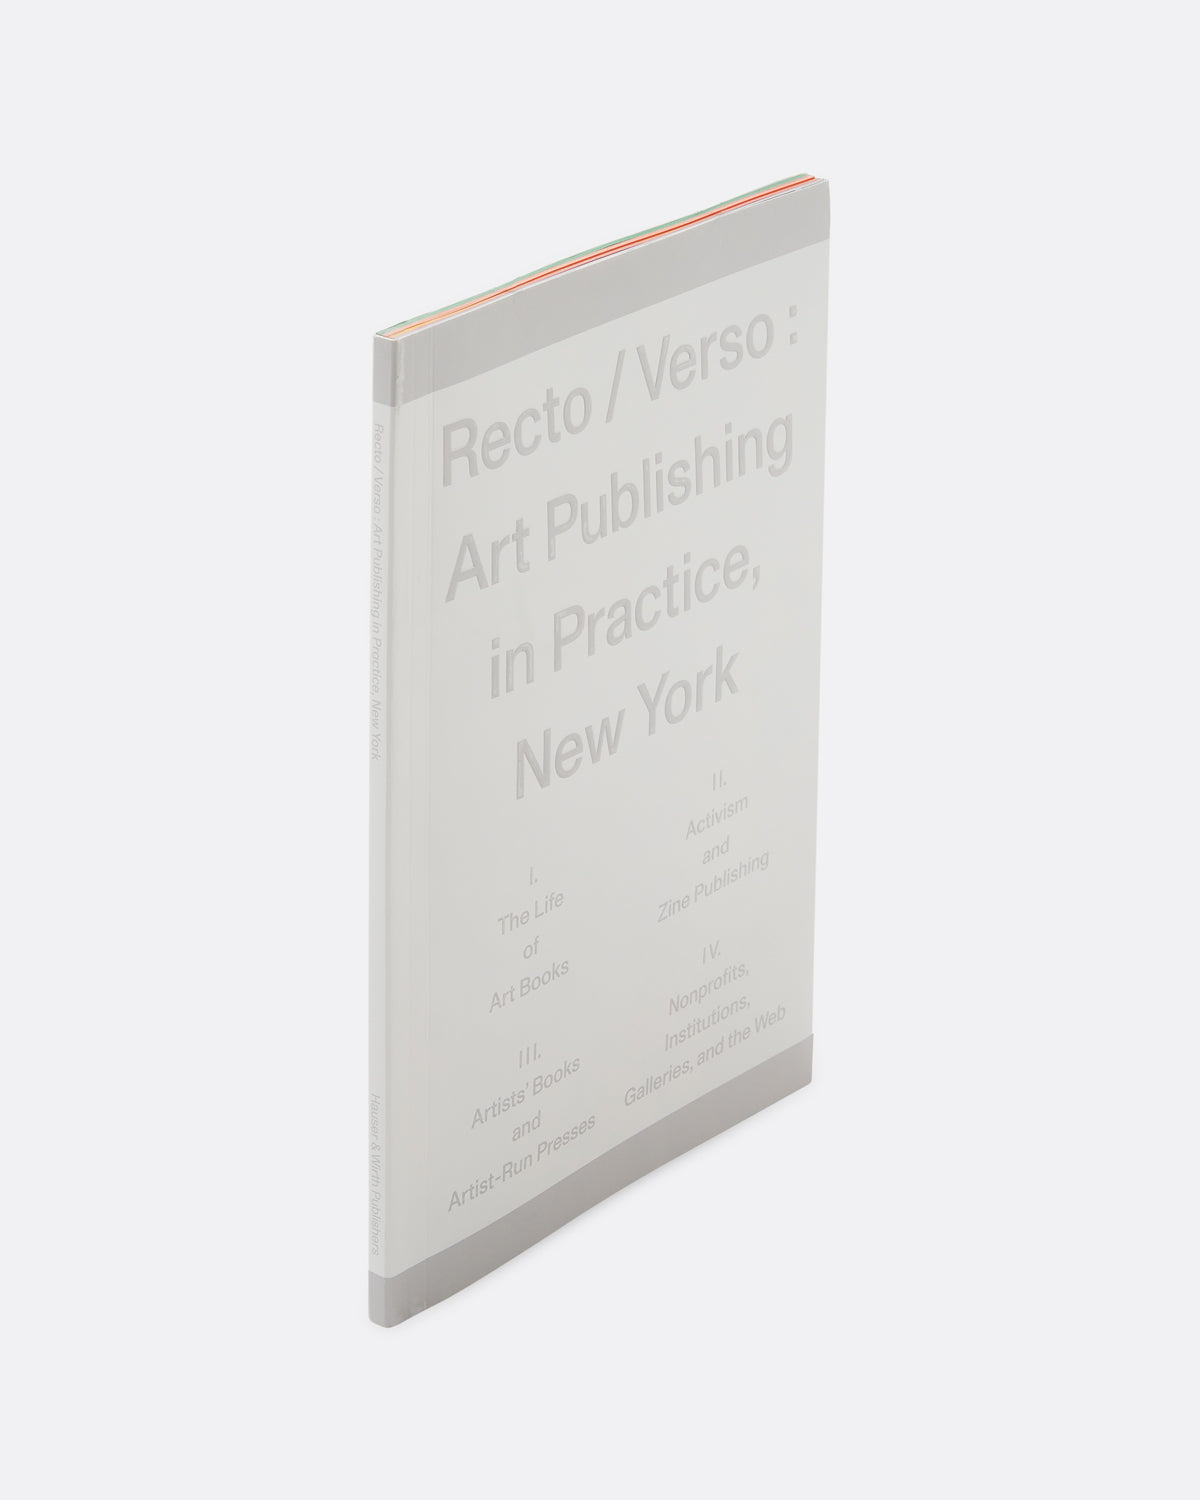 Recto/Verso: Art Publishing in Practice